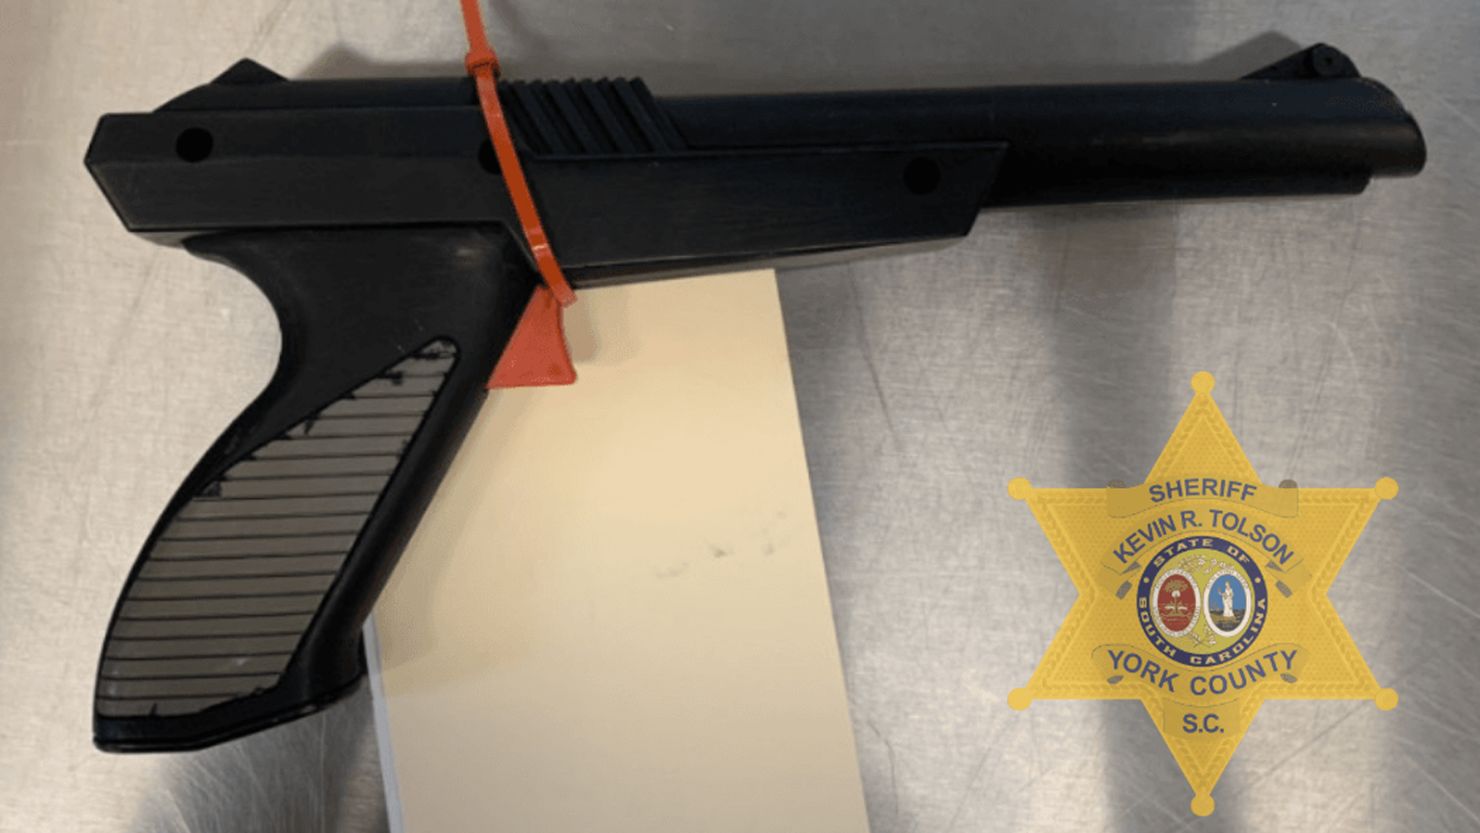 A spray-painted Nintendo "Duck Hunt" game pistol.